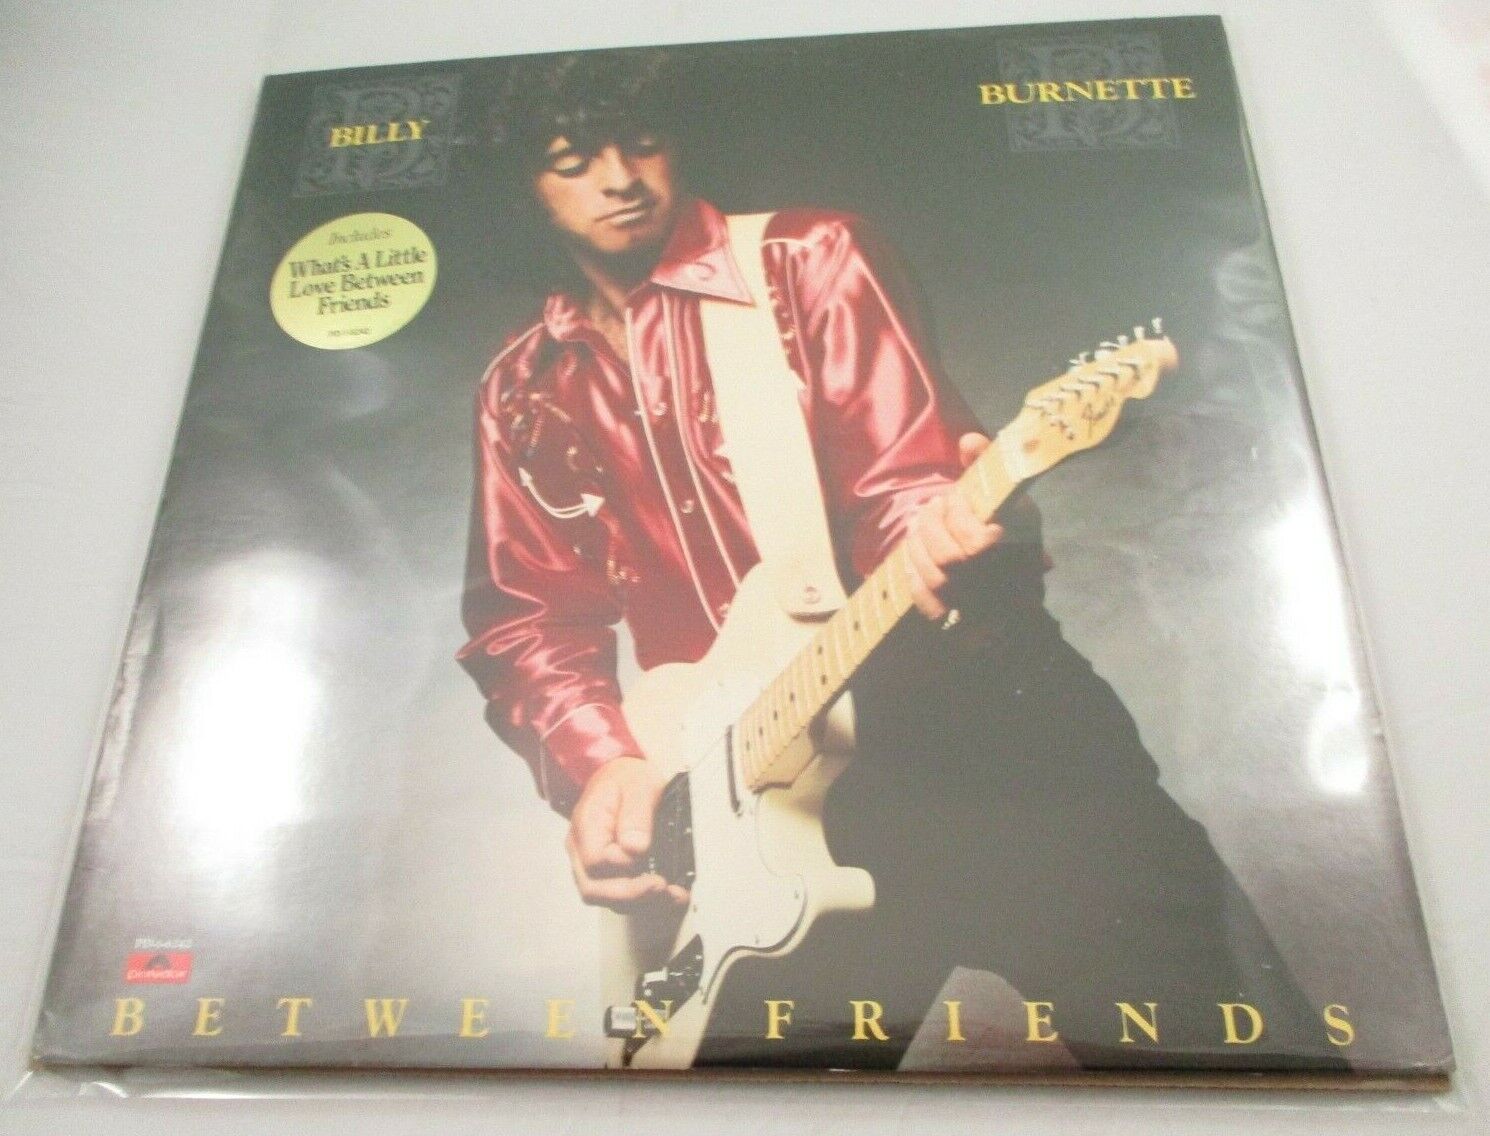 Billy Burnette – Between Friends PD-1-6242 LP Promo US 1979 PLUS FREE CD